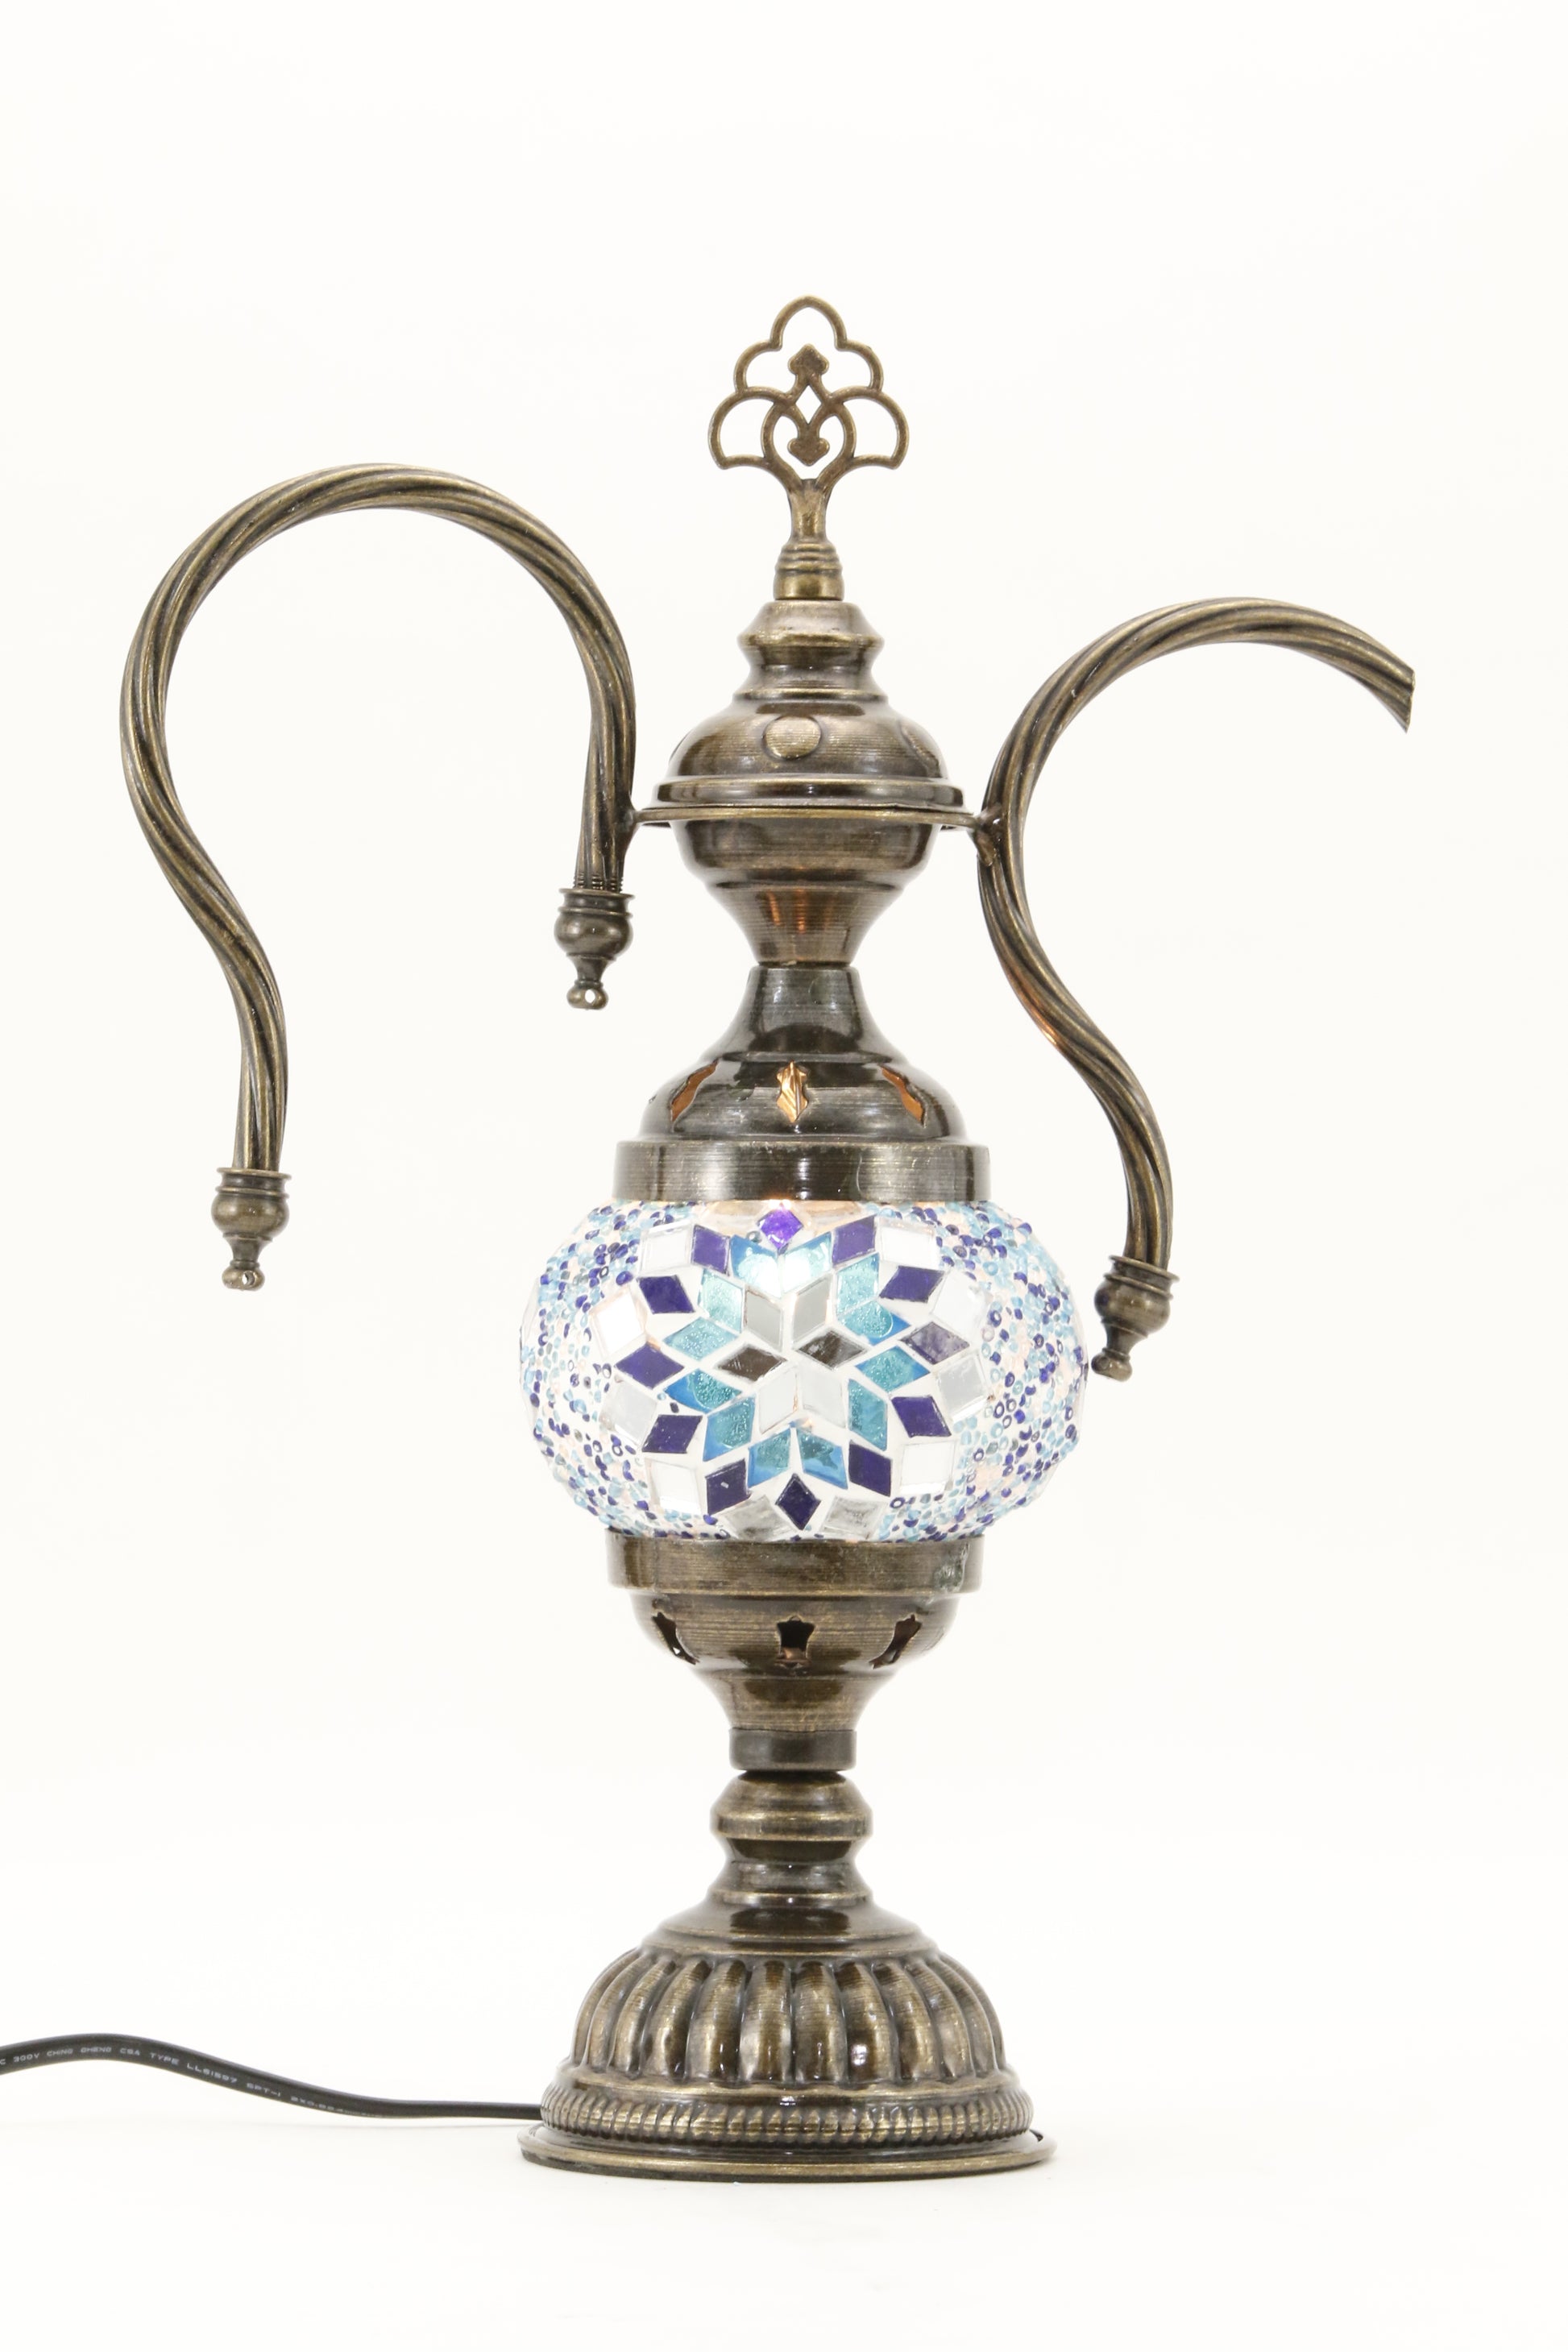 TURKISH MOSAIC GENIE BOTTLE TABLE LAMP BLUE-TURNED ON